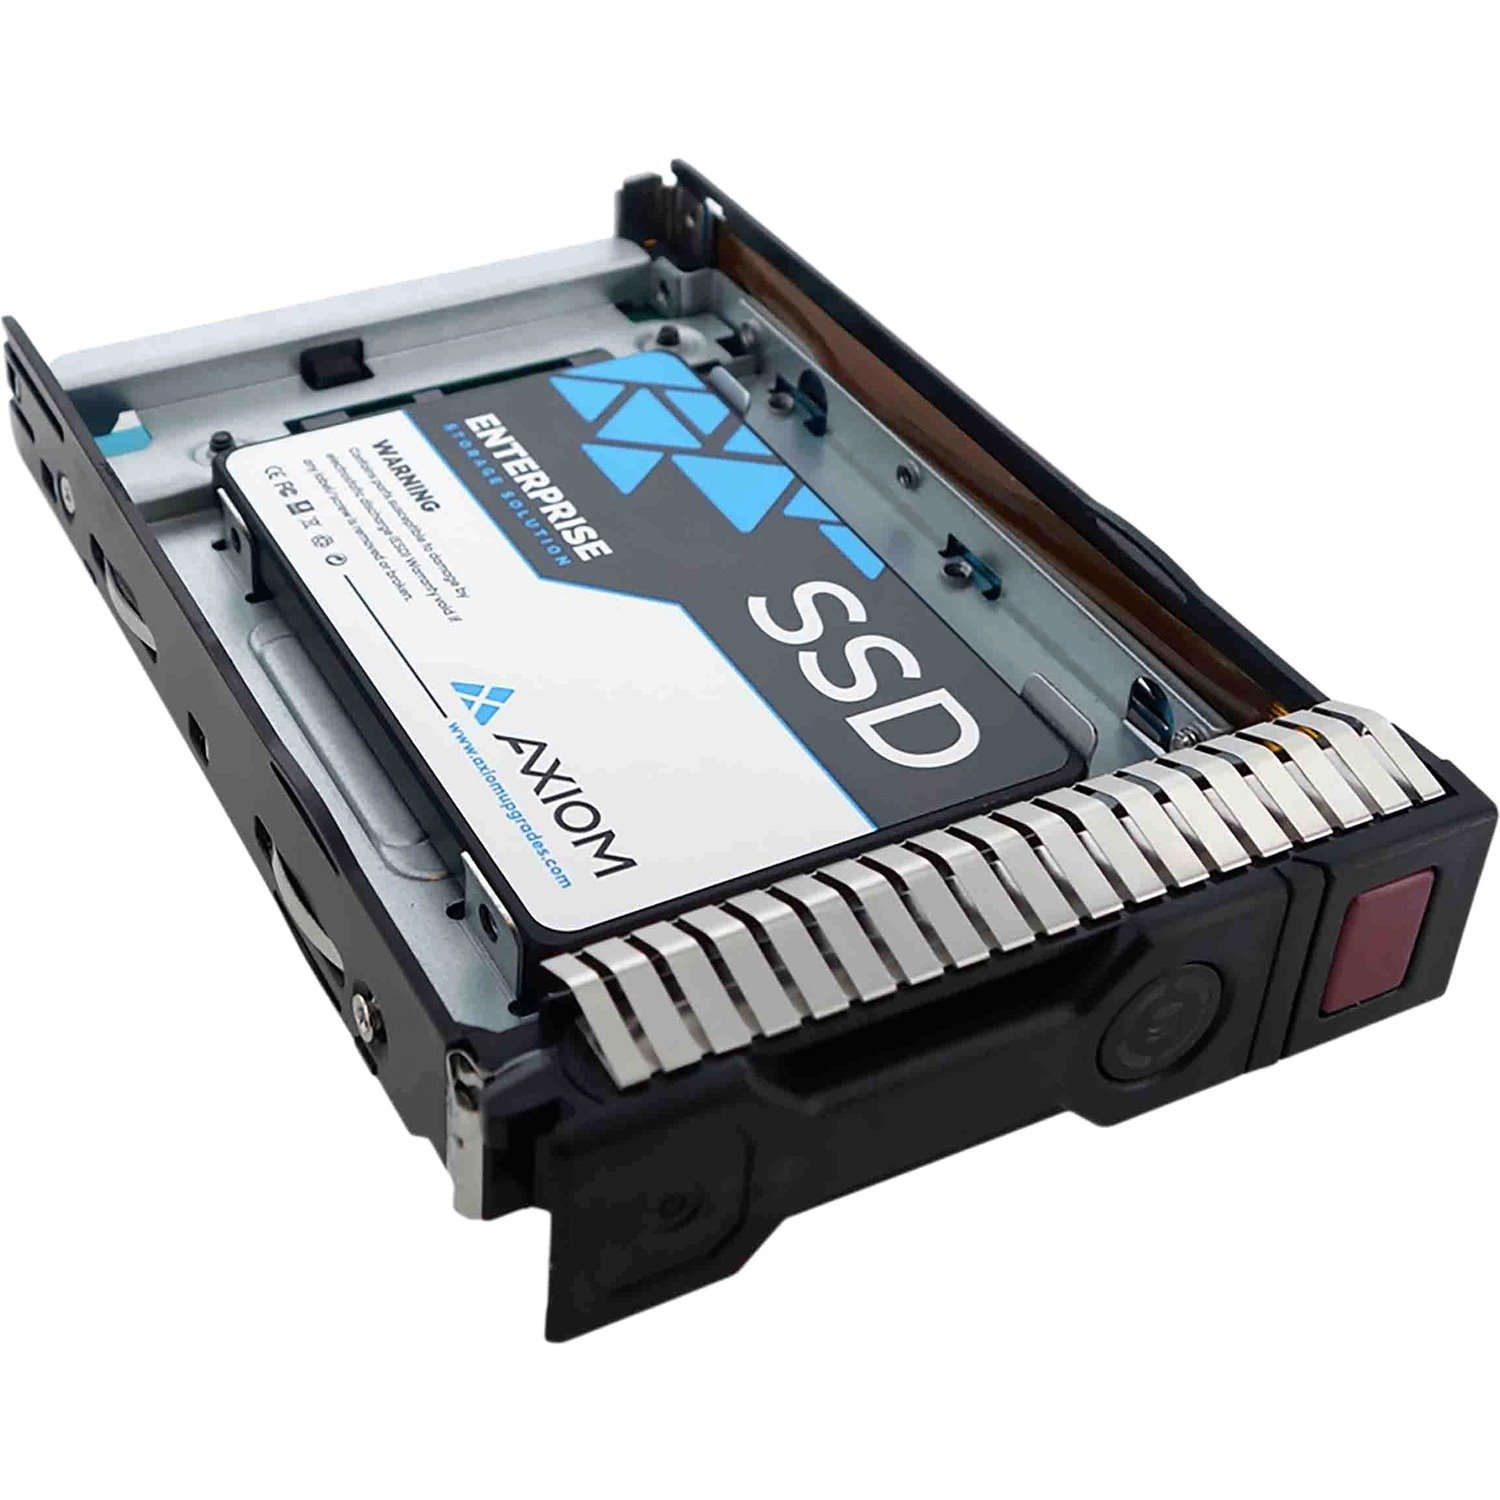 Axiom 3.84TB Enterprise EV200 3.5-inch Hot-Swap SATA SSD for HP